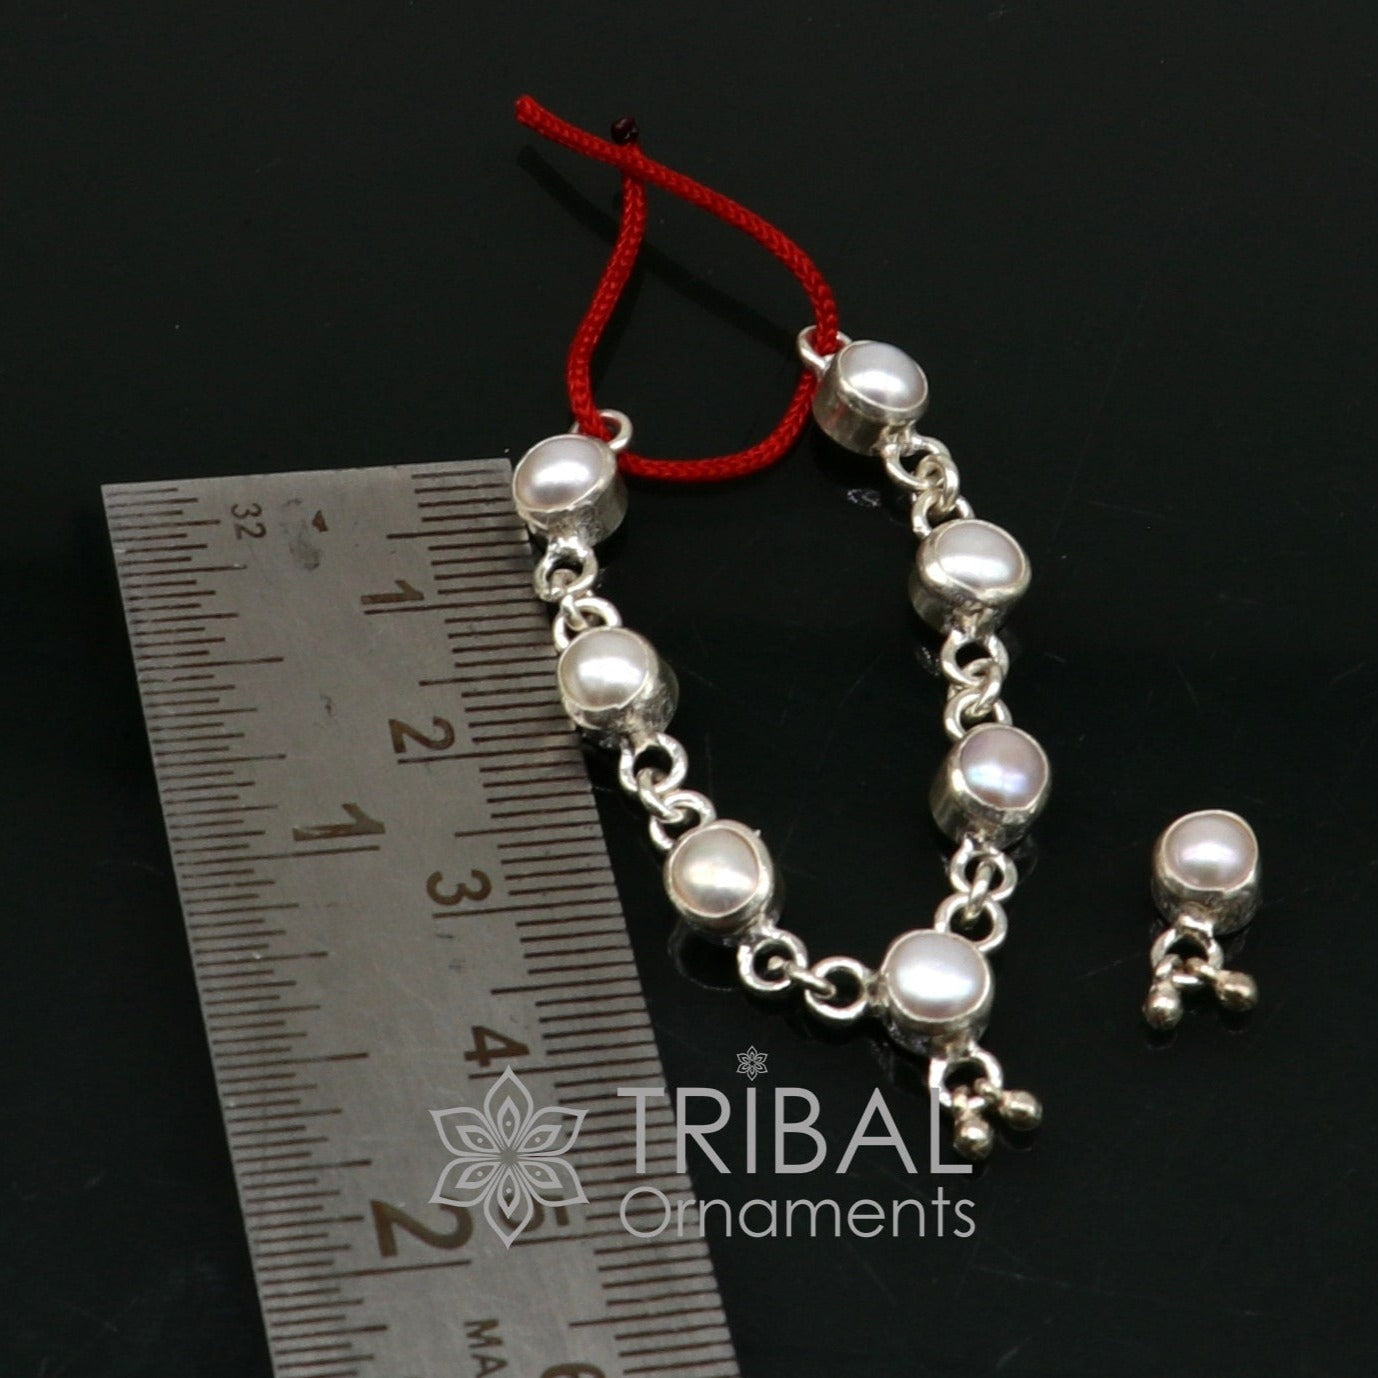 925 sterling silver Single line pearl chain necklace set for Lord Krishna Laddu Gopala, silver handmade little Krishna jewelry set587 - TRIBAL ORNAMENTS